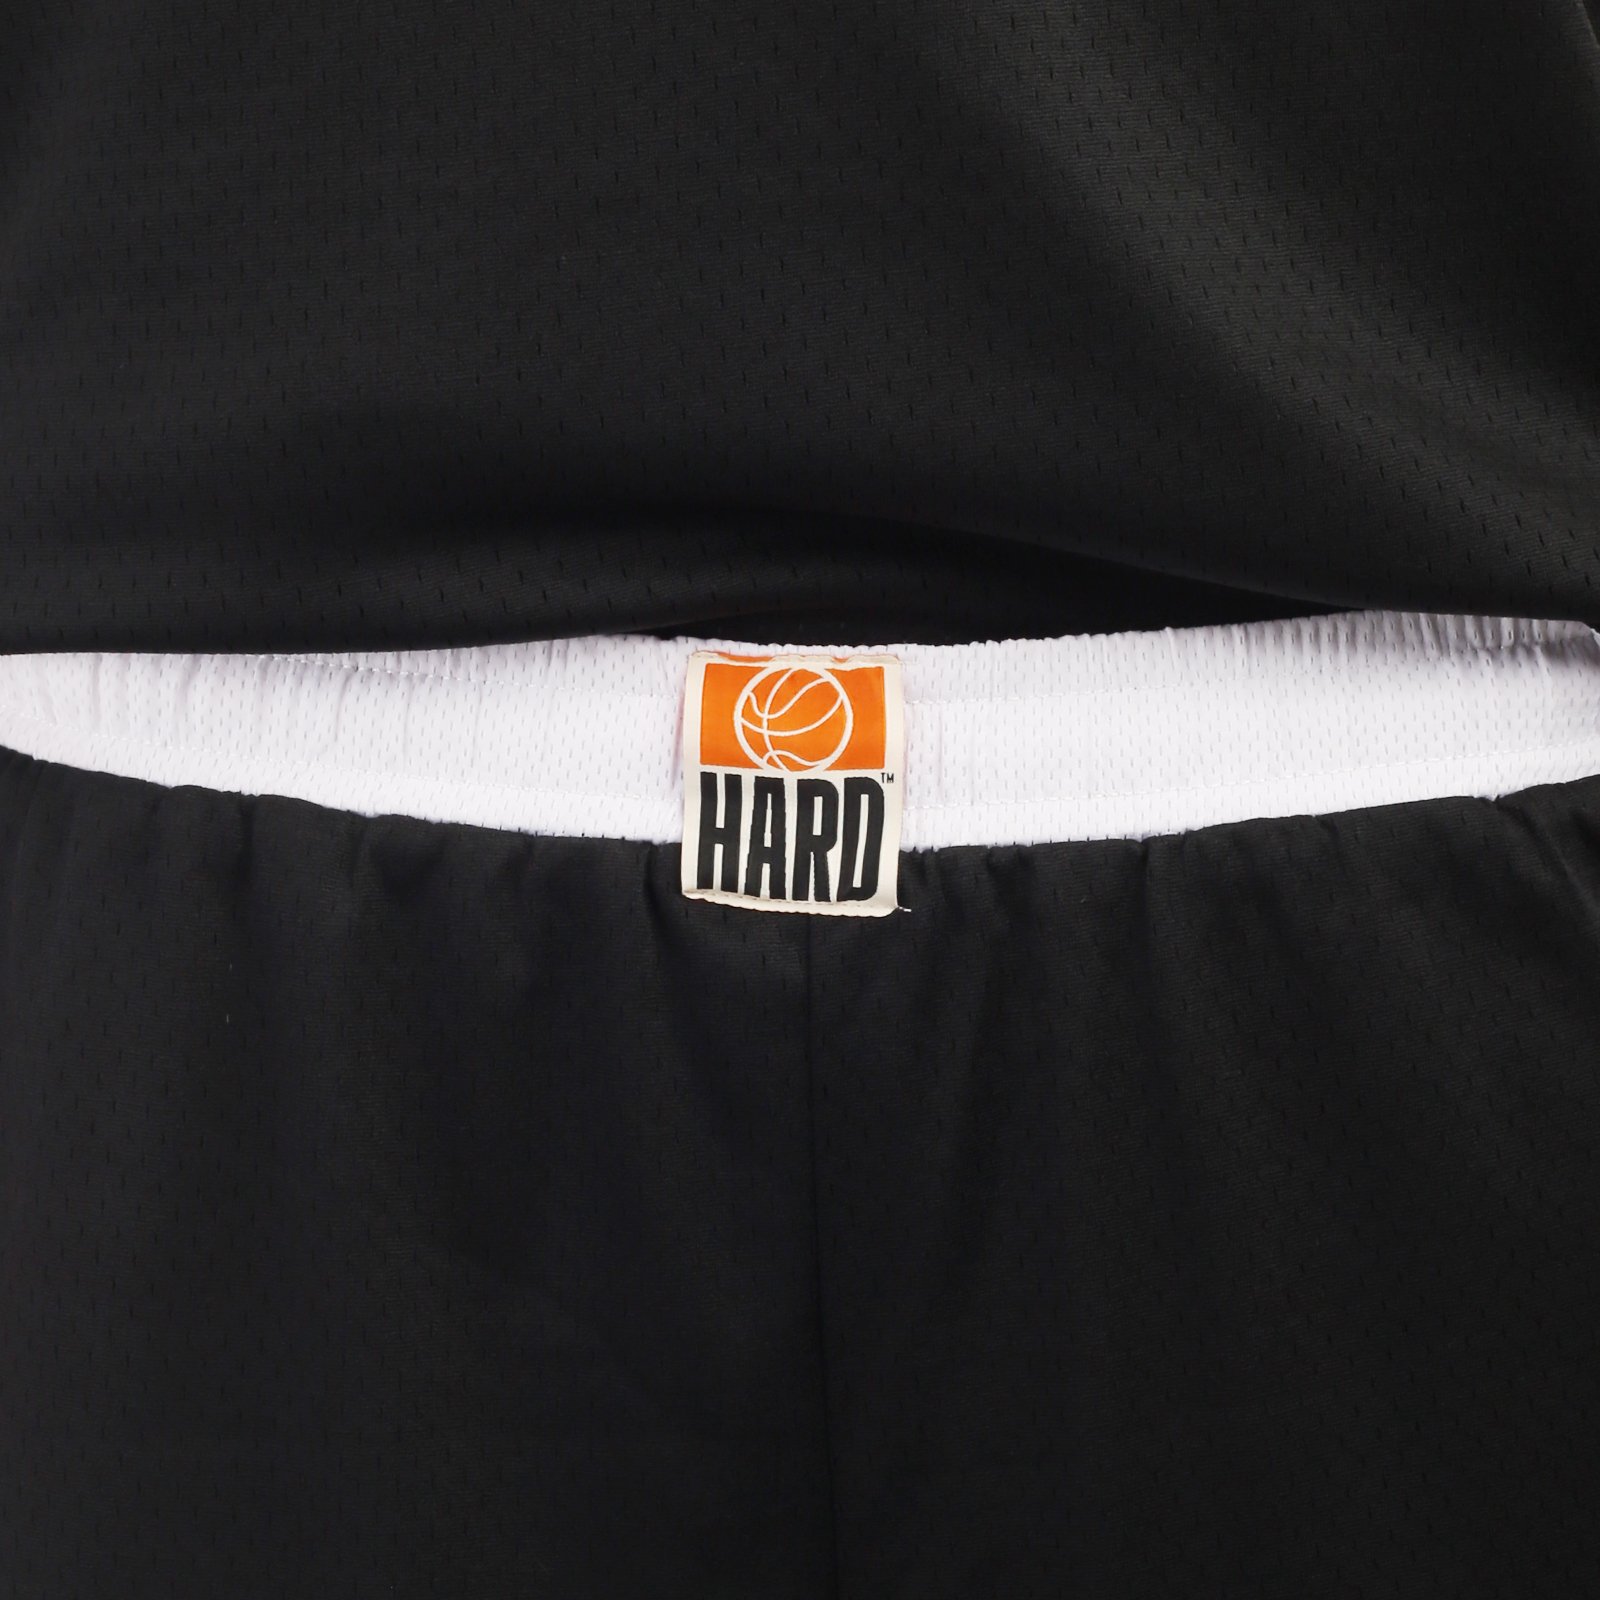 мужские шорты Hard Teammate  (Teammate short-blk/wht)  - цена, описание, фото 5